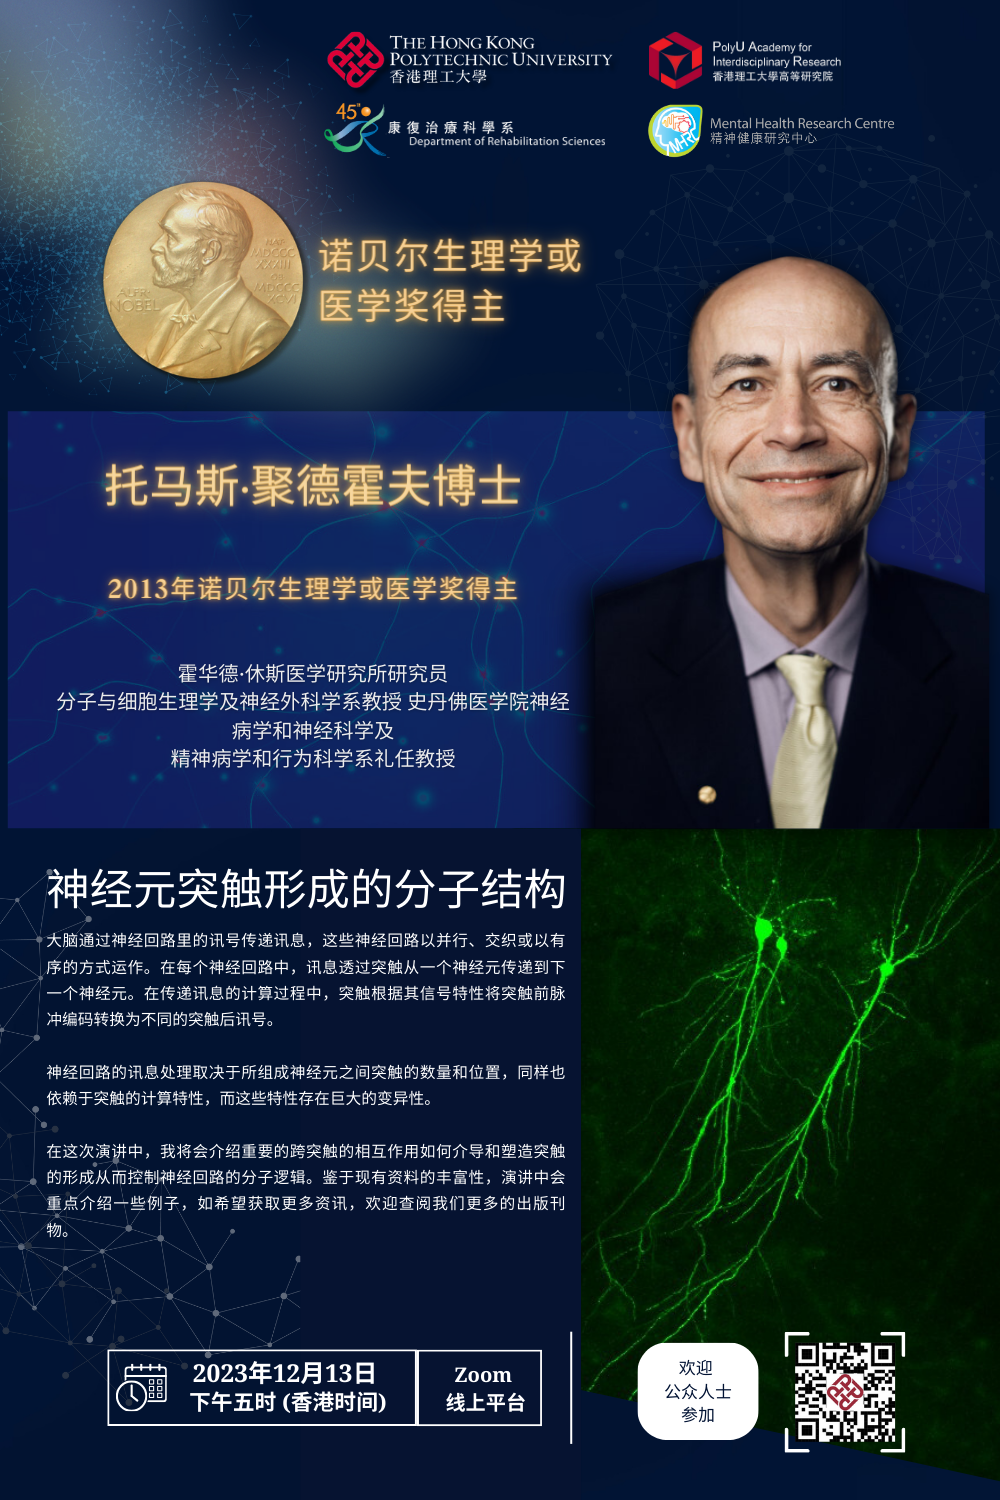 MHRC Nobel Laureate Lecture202312131 1000 x 1500 pxSC